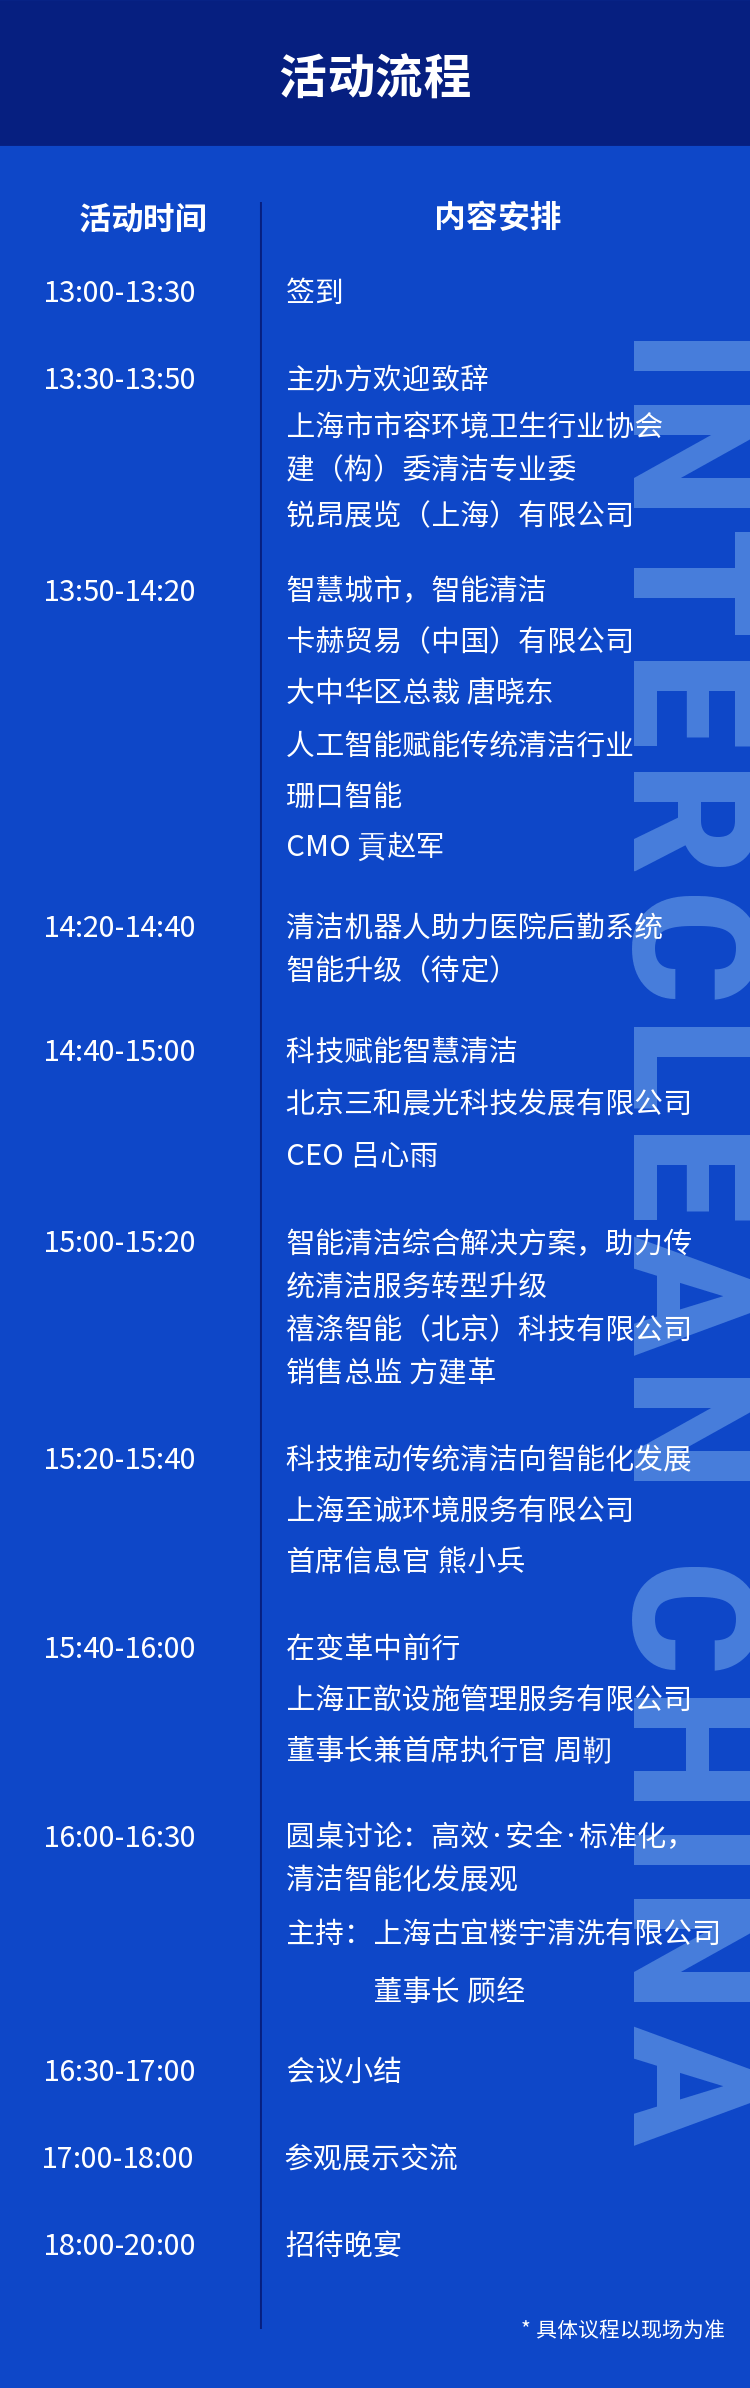 上海会议h5-1604306677565.png